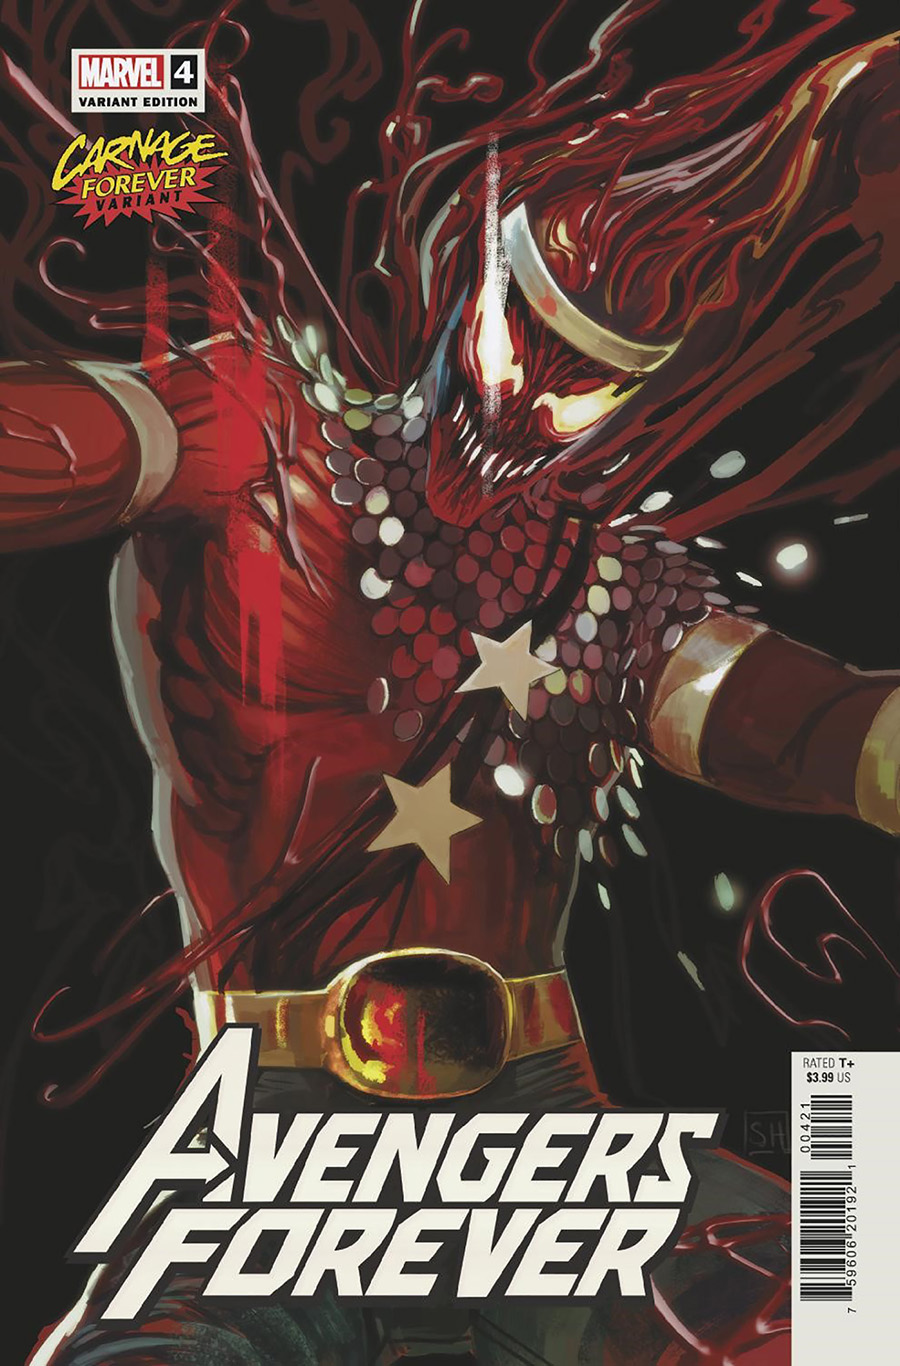 Avengers Forever Vol 2 #4 Cover B Variant Stephanie Hans Carnage Forever Cover (Limit 1 Per Customer)